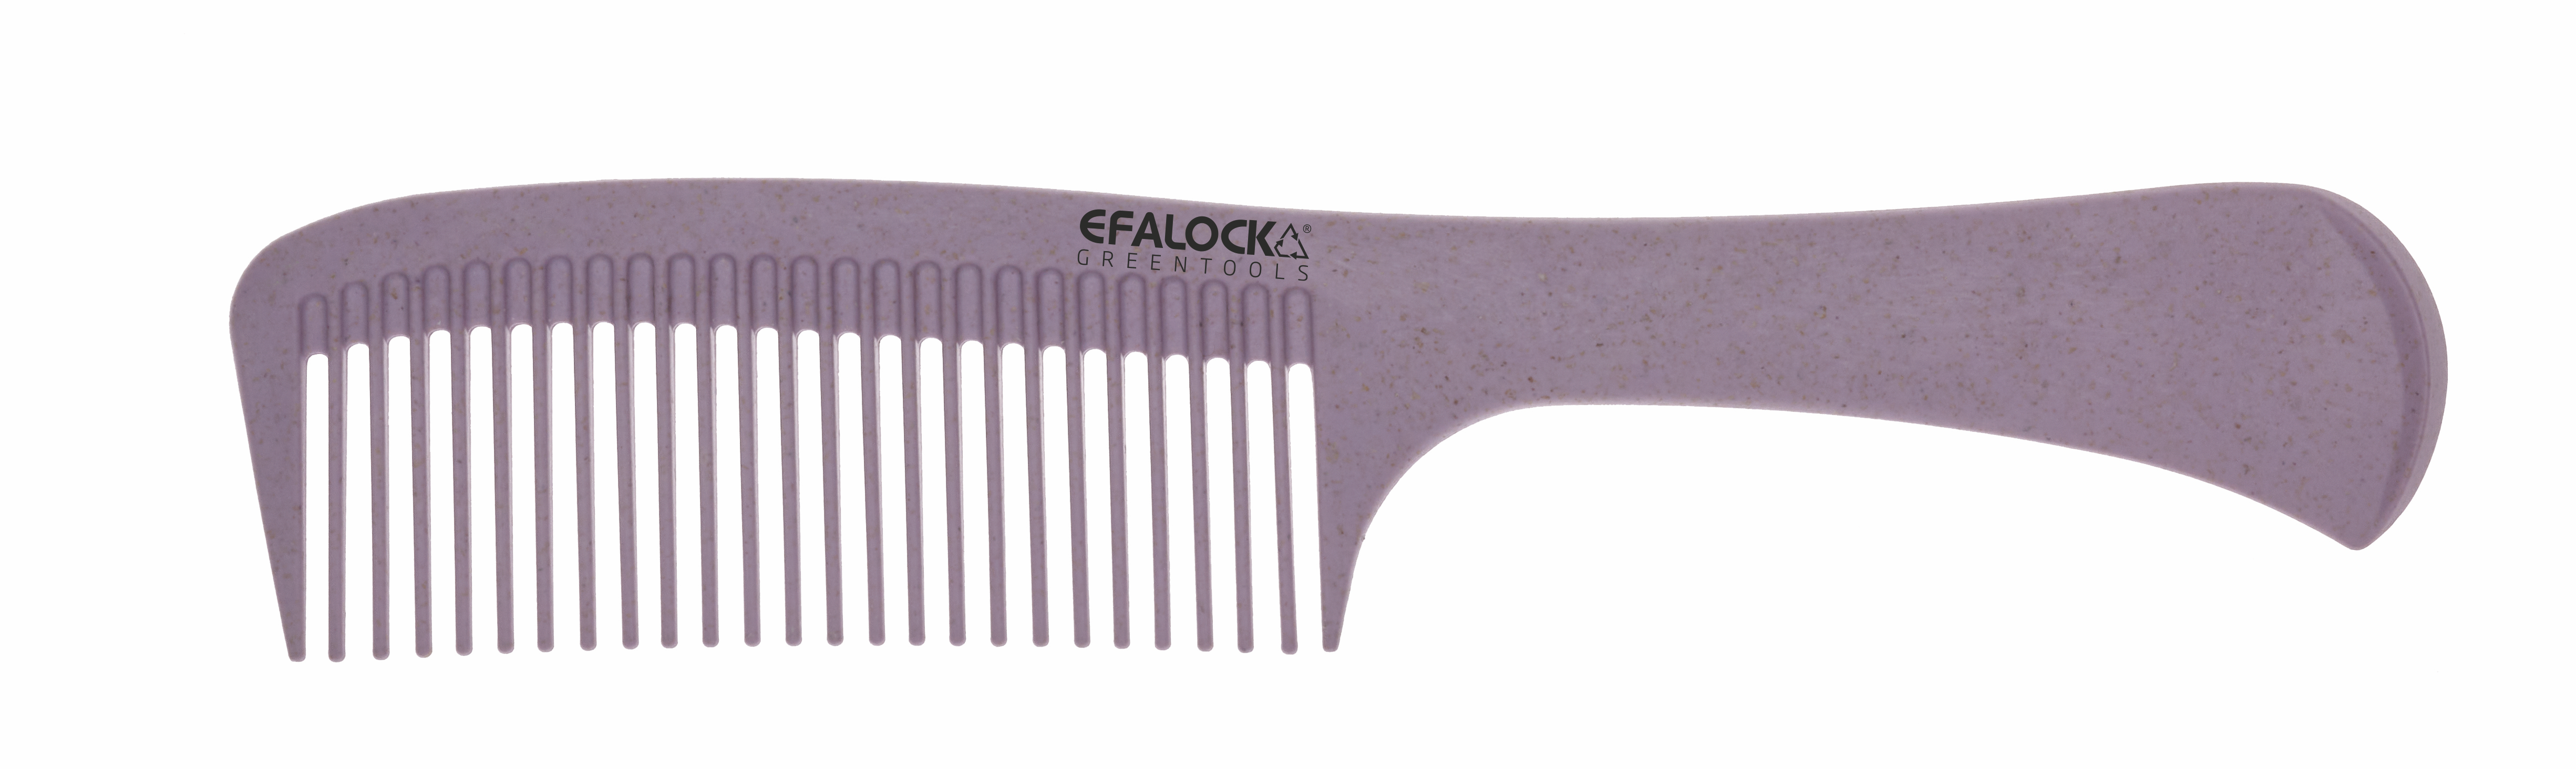 PURPLEGREEN  Rake comb # 8.7